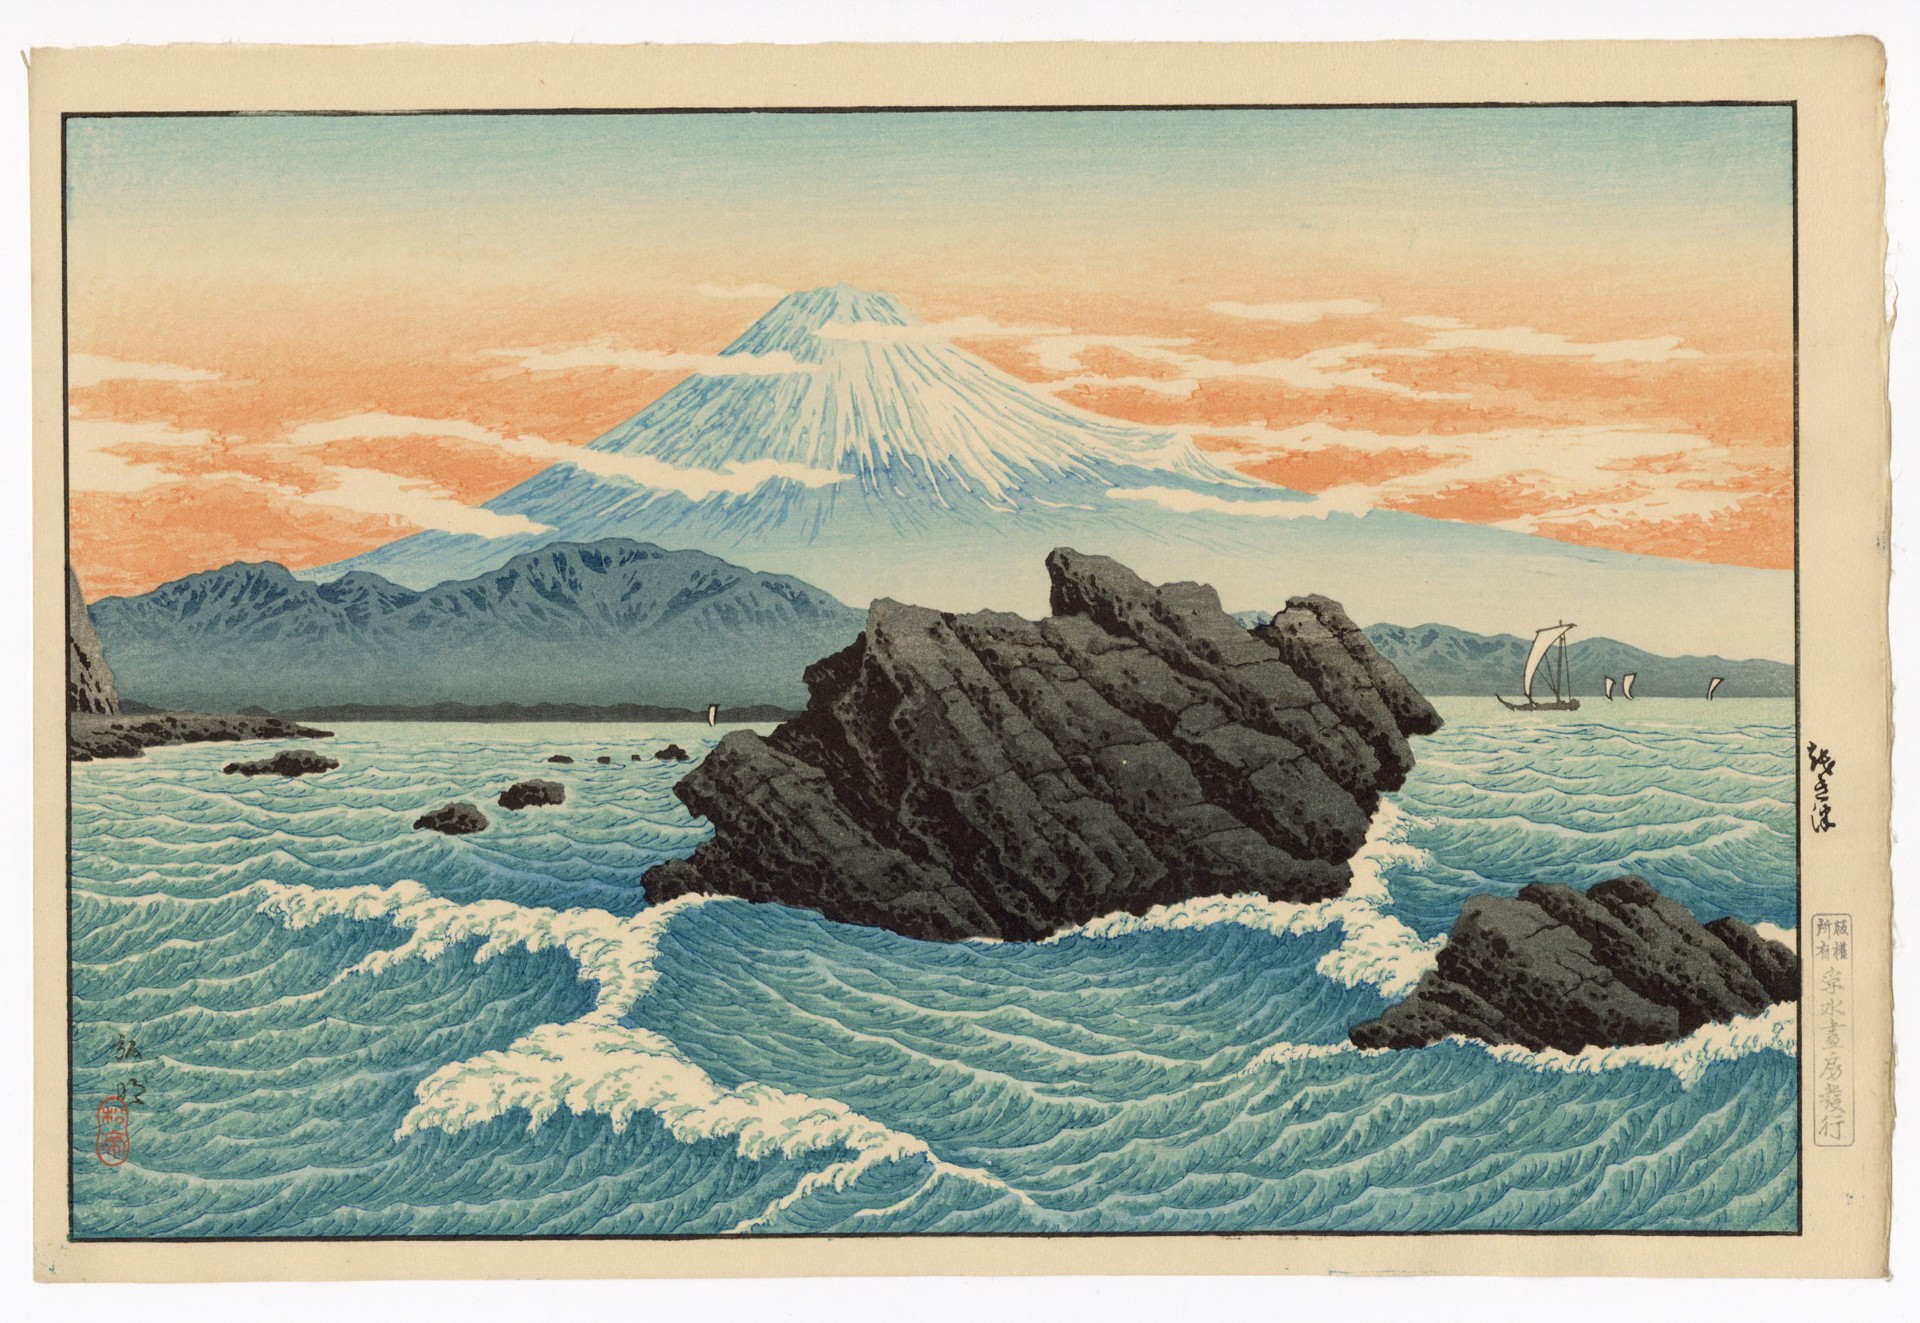 Okitsu Mt. Fuji in the Four Seasons by Takahashi Hiroaki